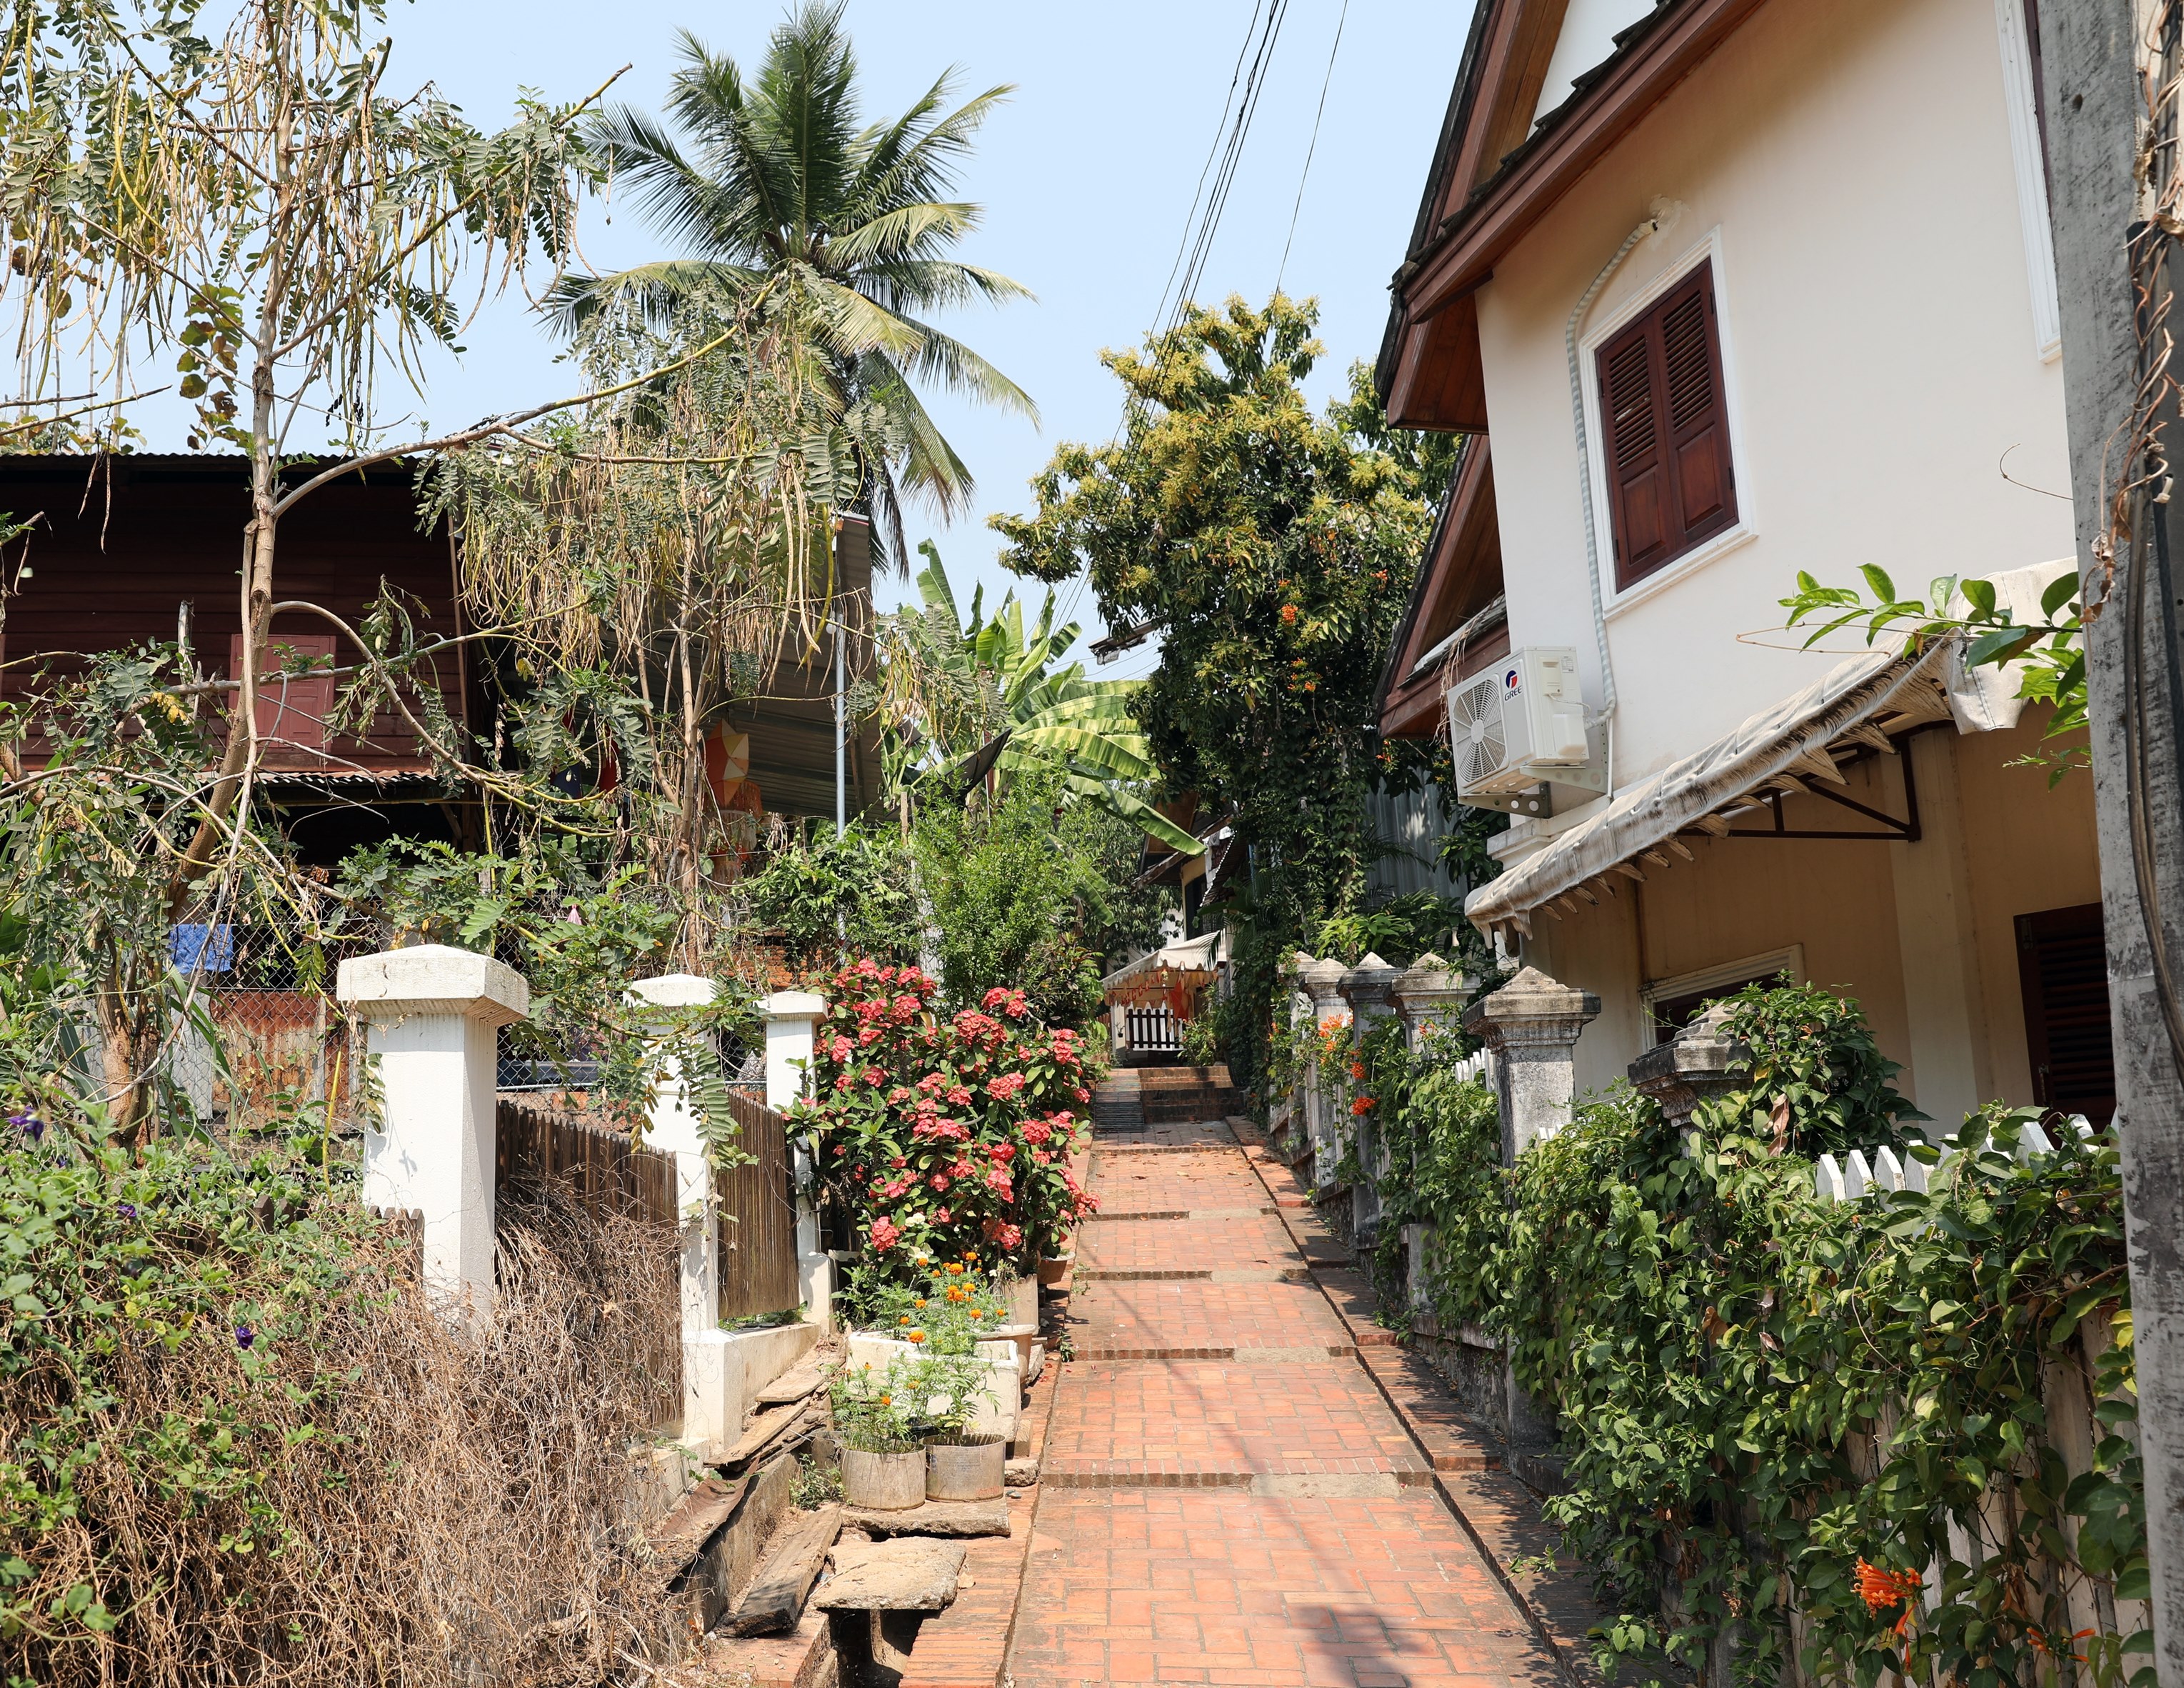 Colonial Downtown of Luang Prabang